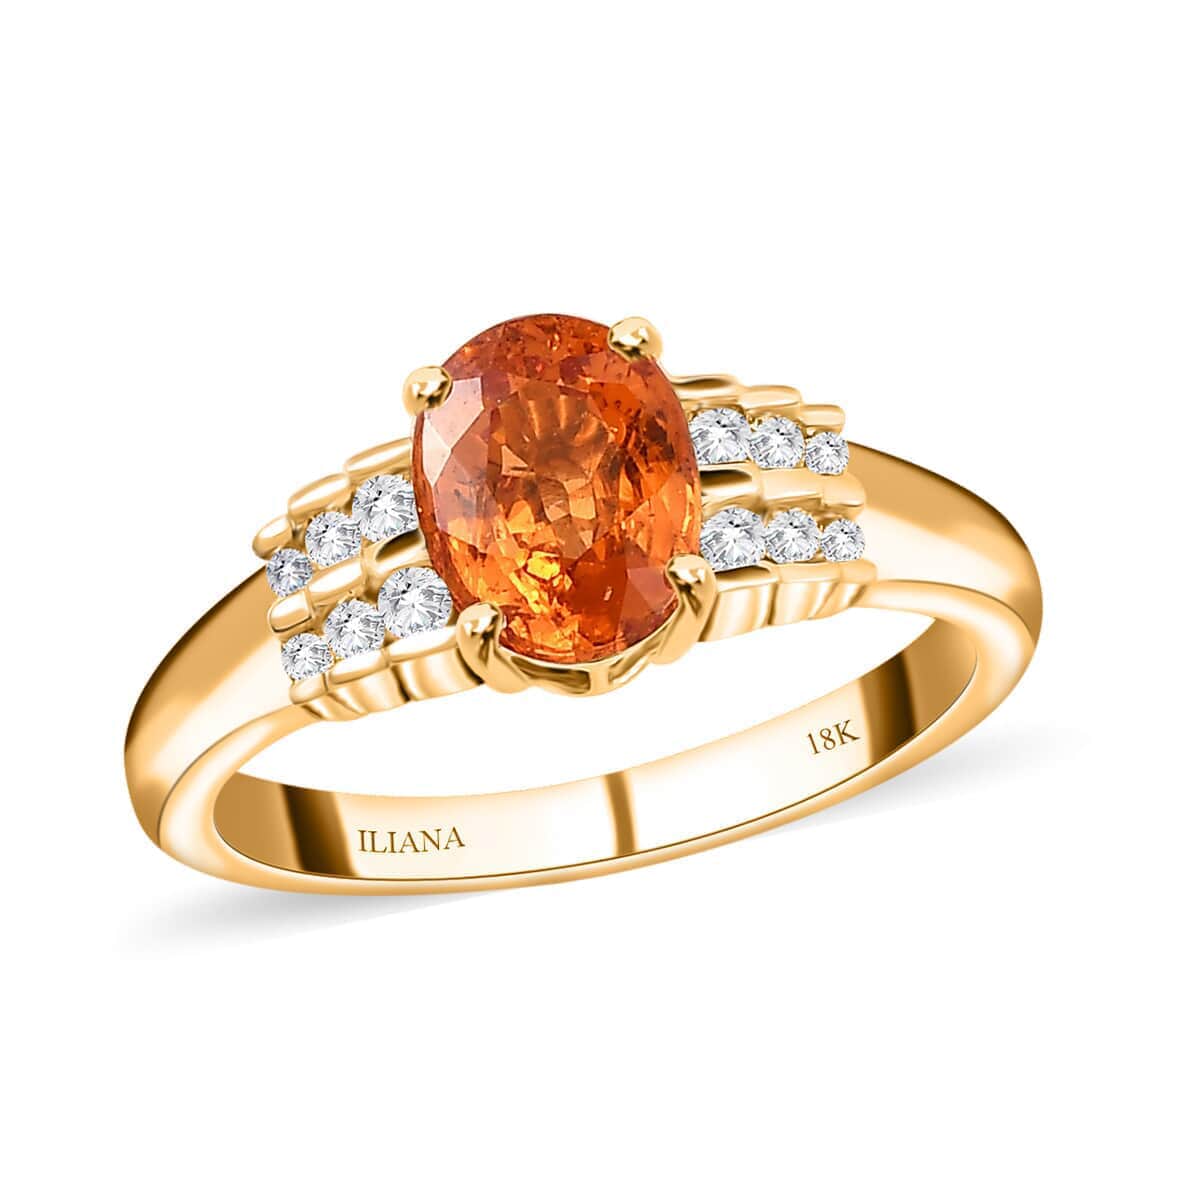 Iliana 18K Yellow Gold AAAA Nigerian Spessartite Garnet and G-H SI Diamond Ring (Size 8.0) 4.60 Grams 1.90 ctw image number 0